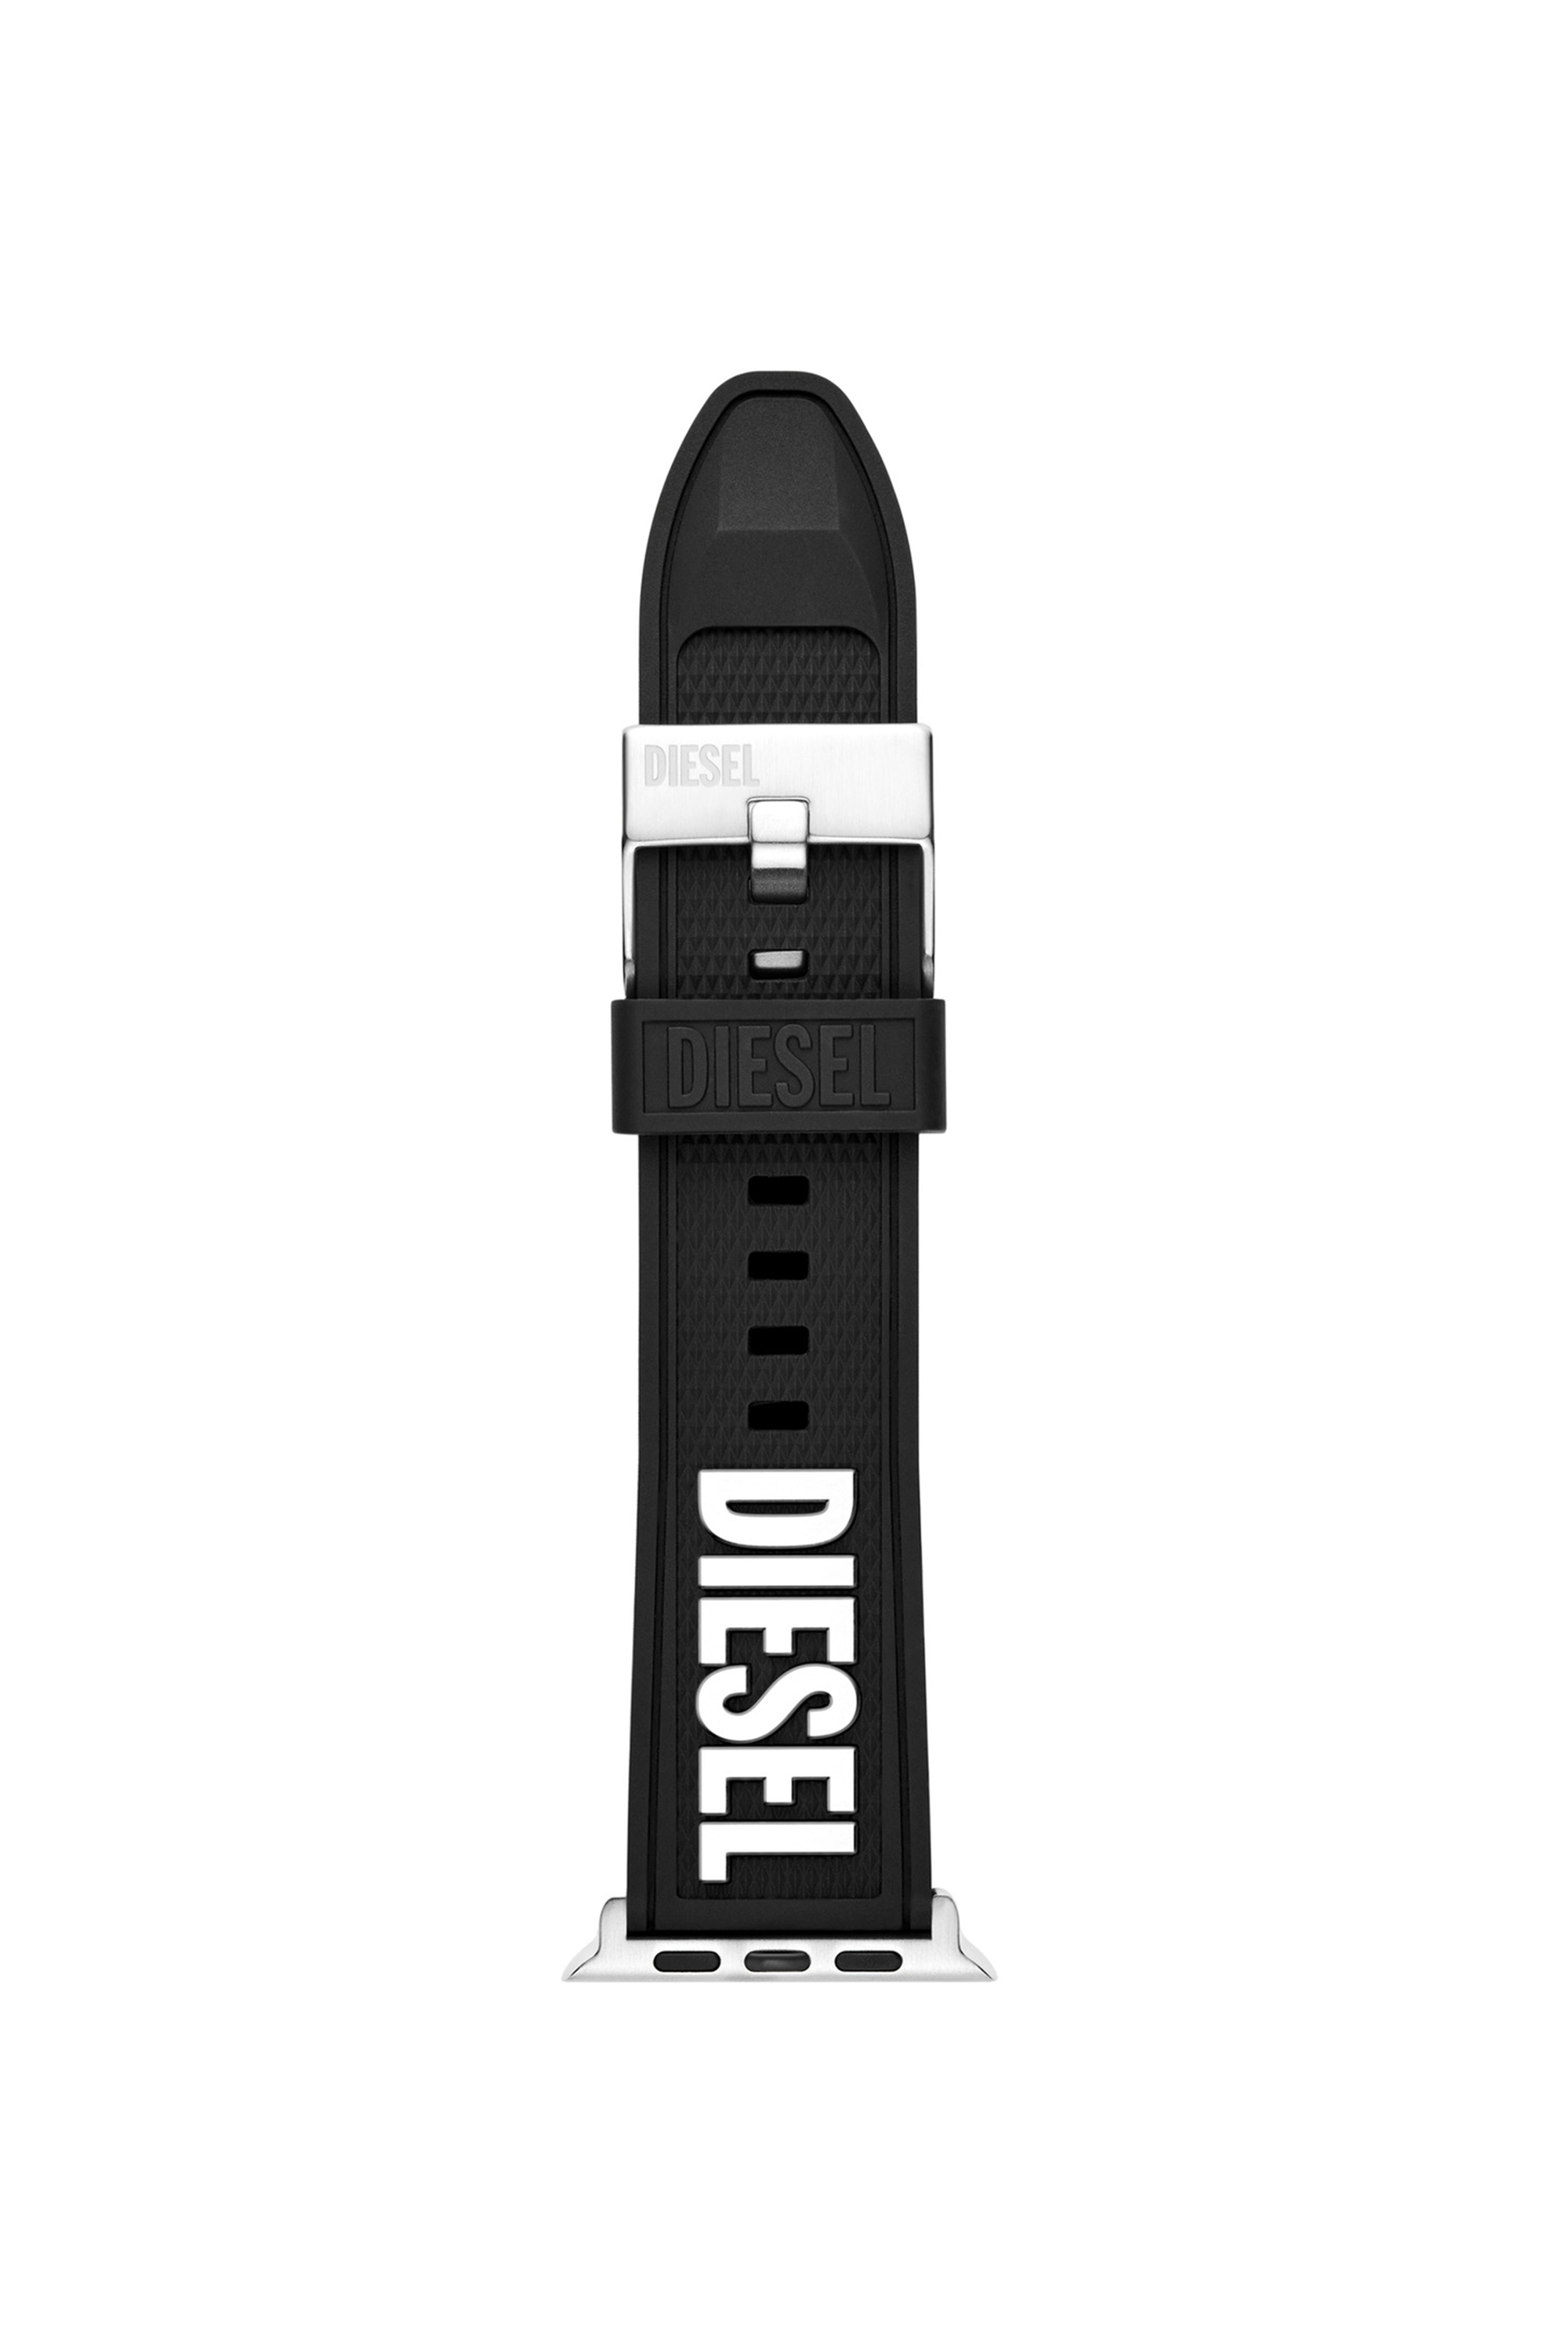 Diesel - DSS011, ブラック - Image 1